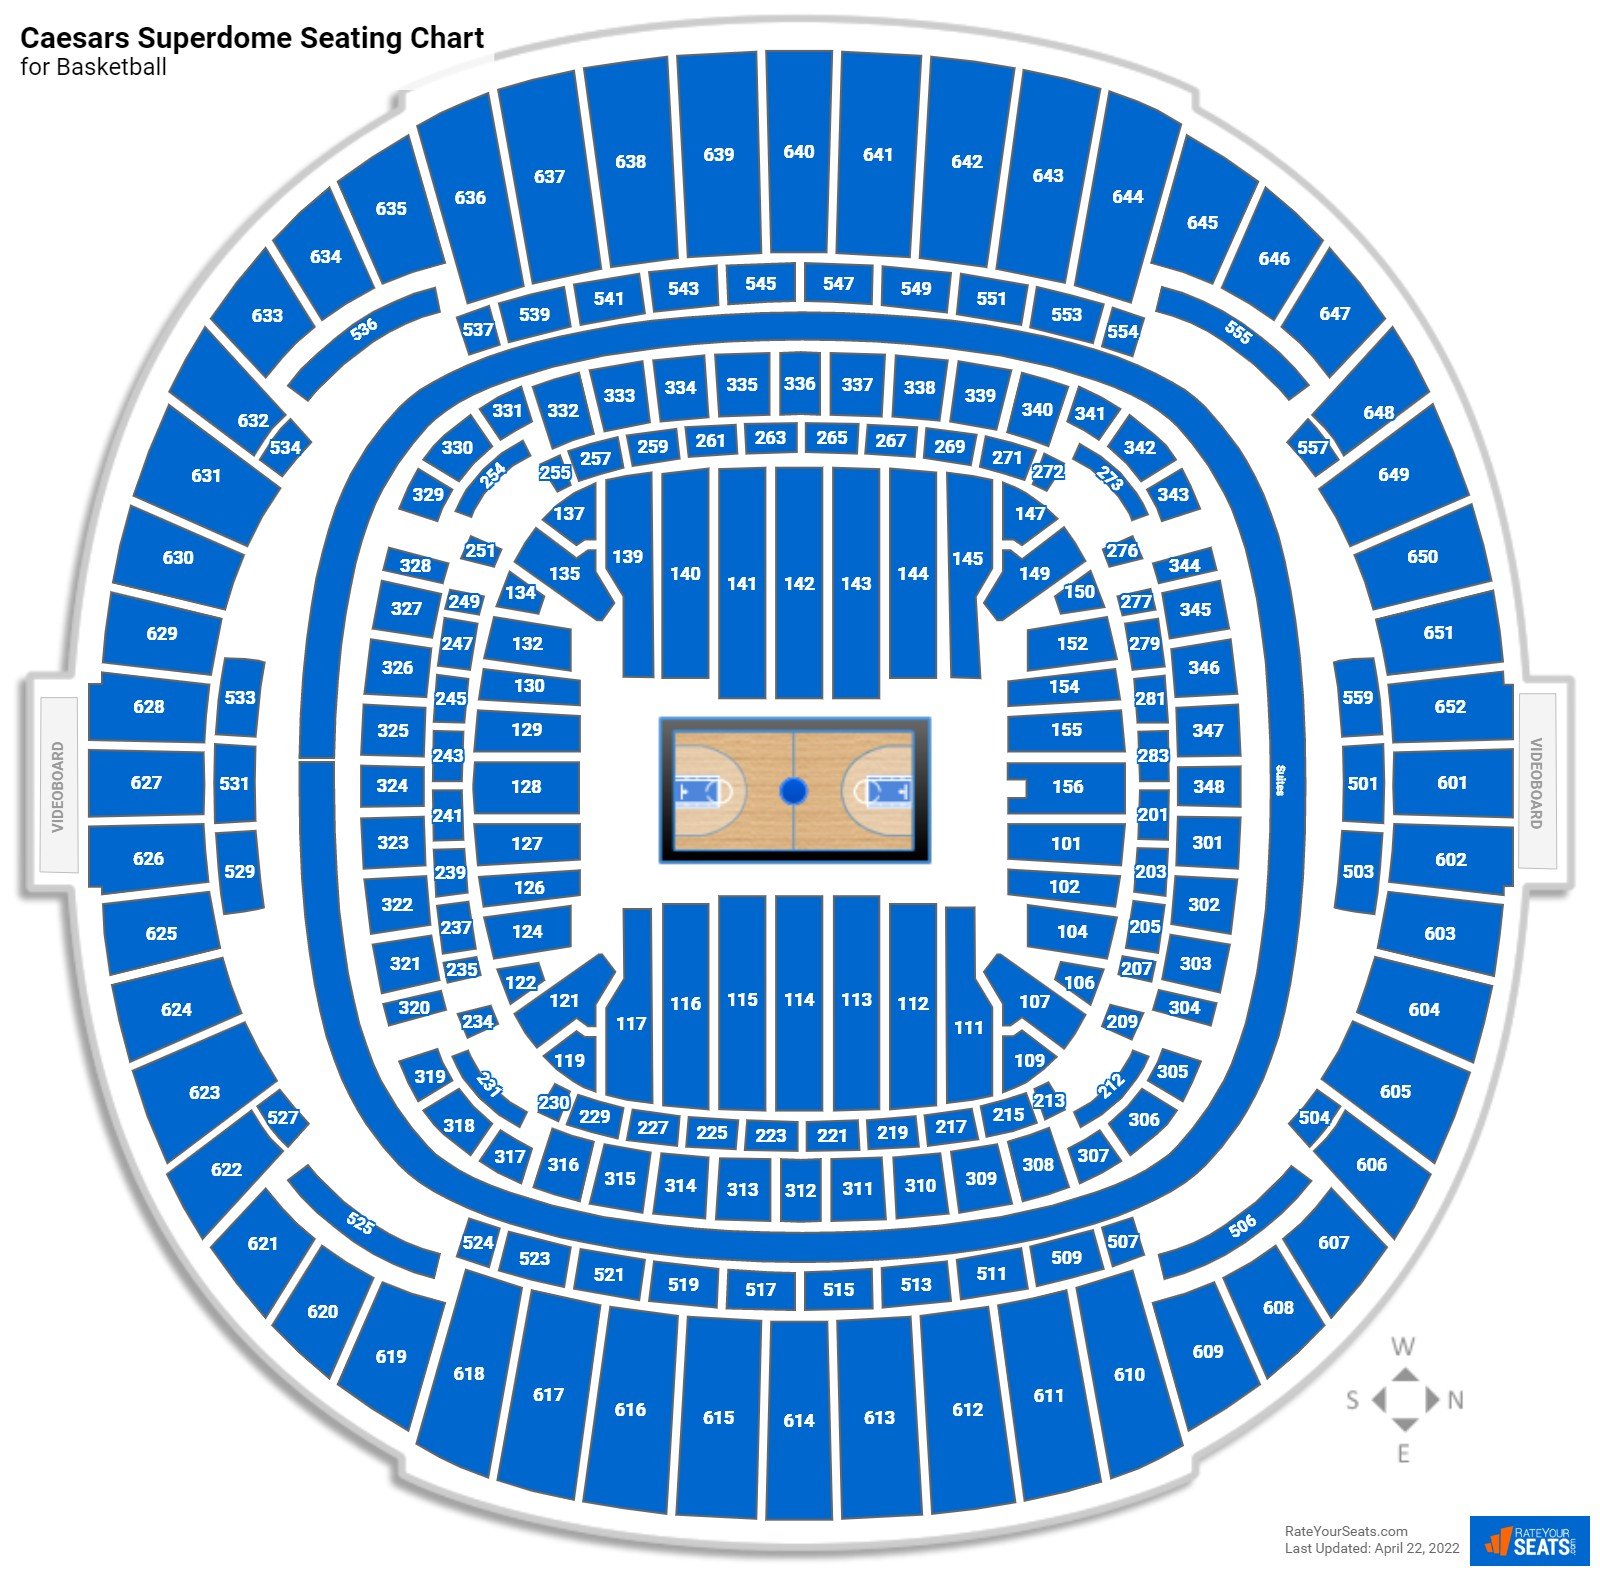 caesars-superdome-seating-chart-for-basketball.jpg